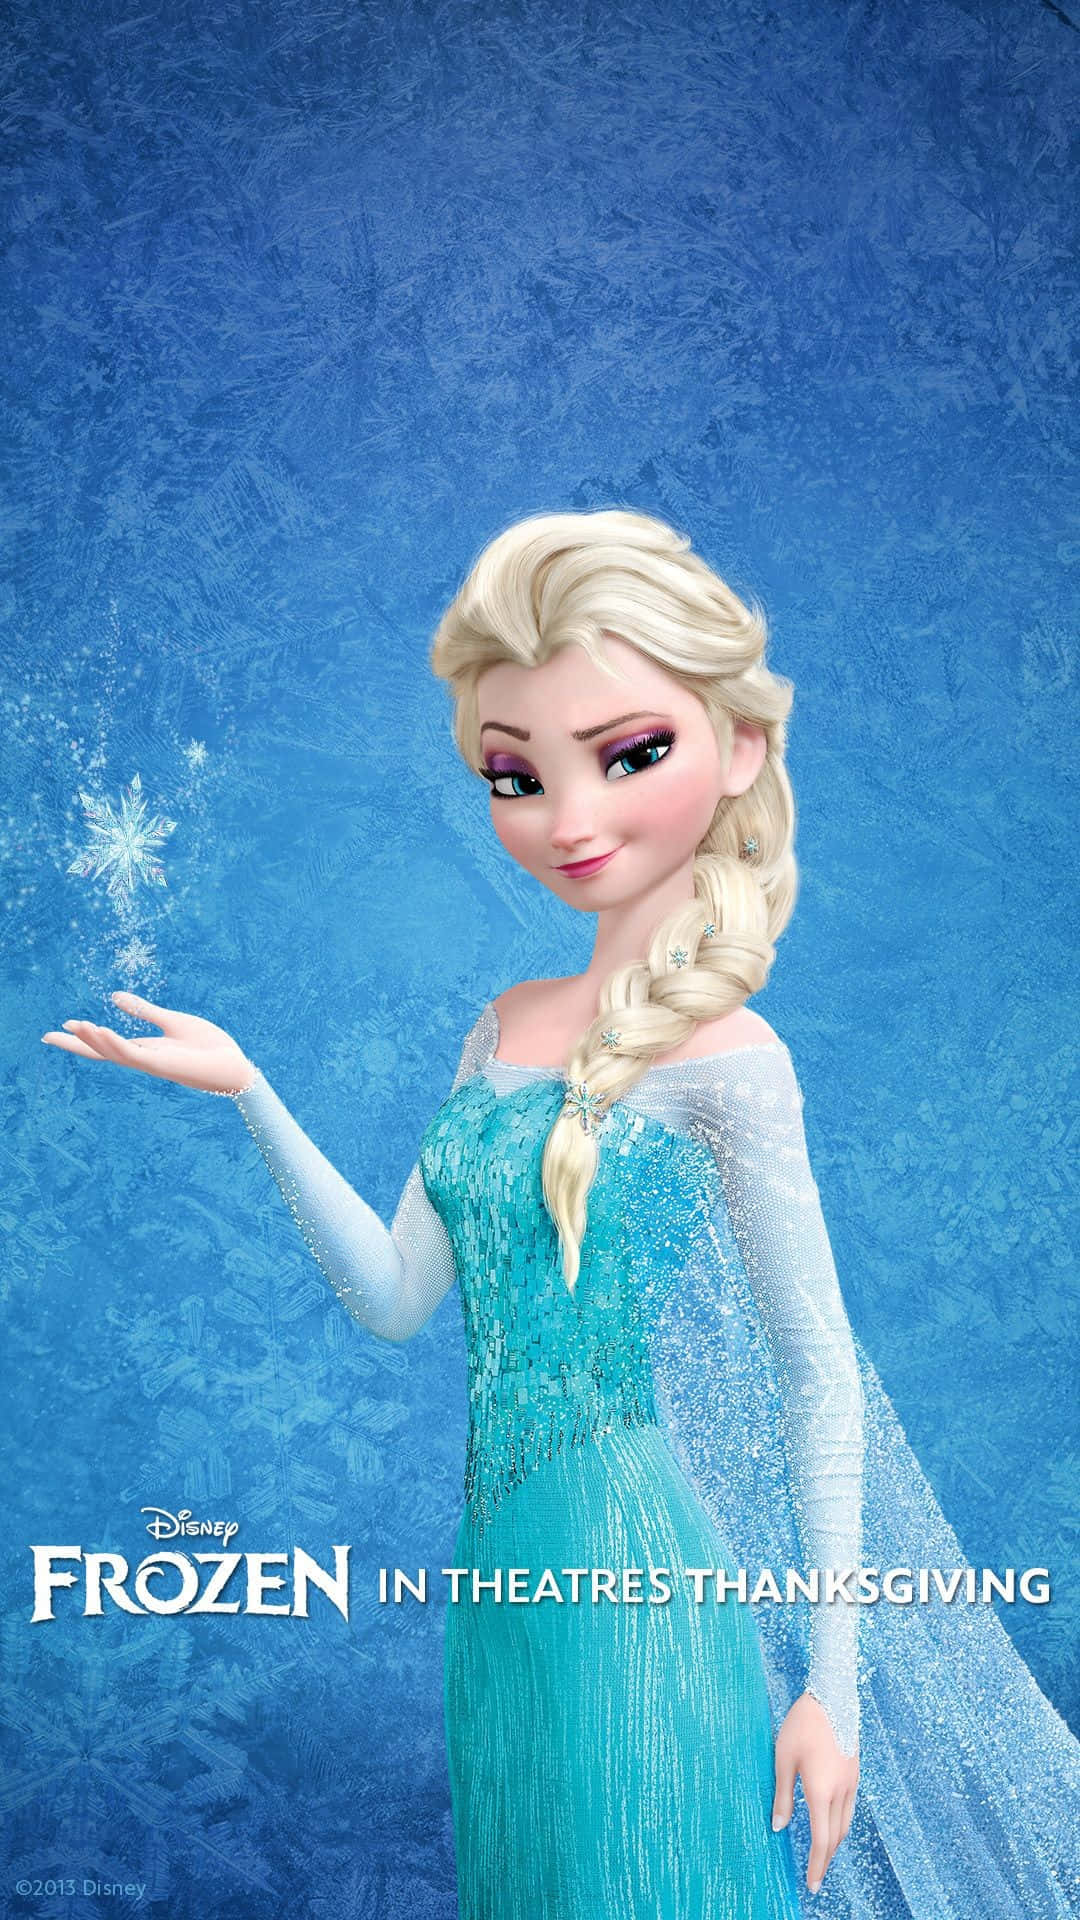 "Look at the magic I can create." -Elsa